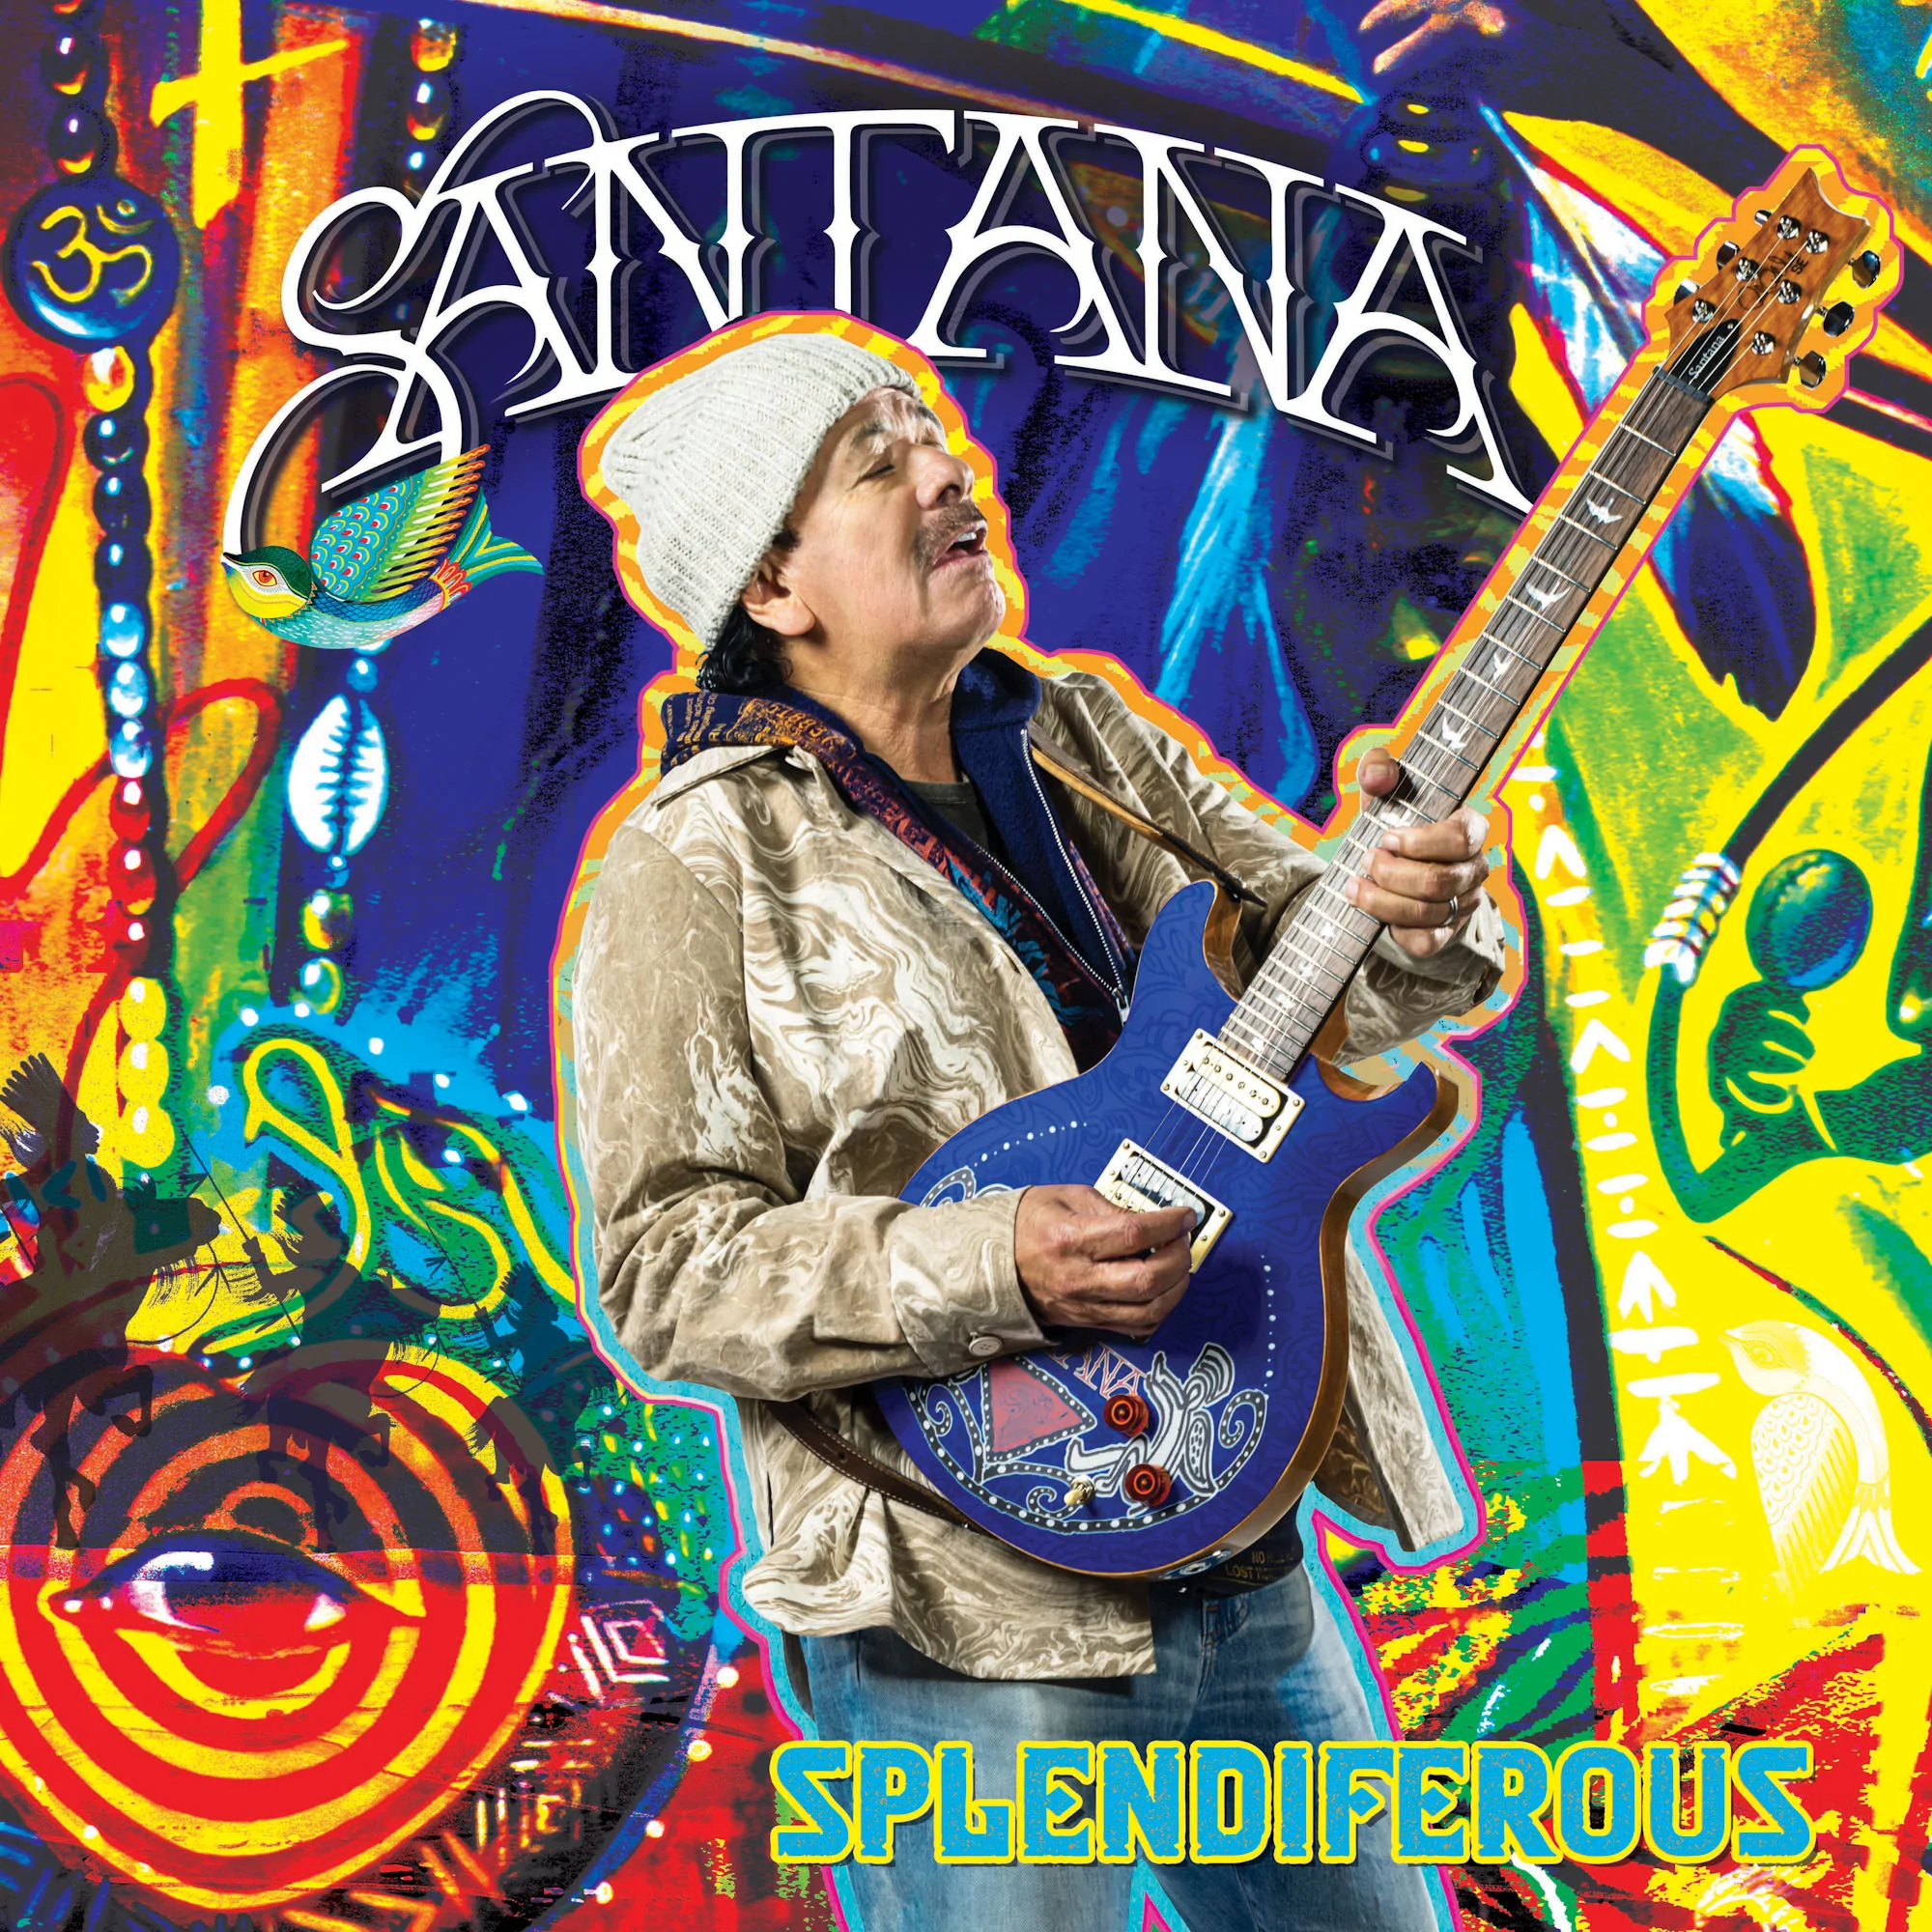 Splendiferous by Santana